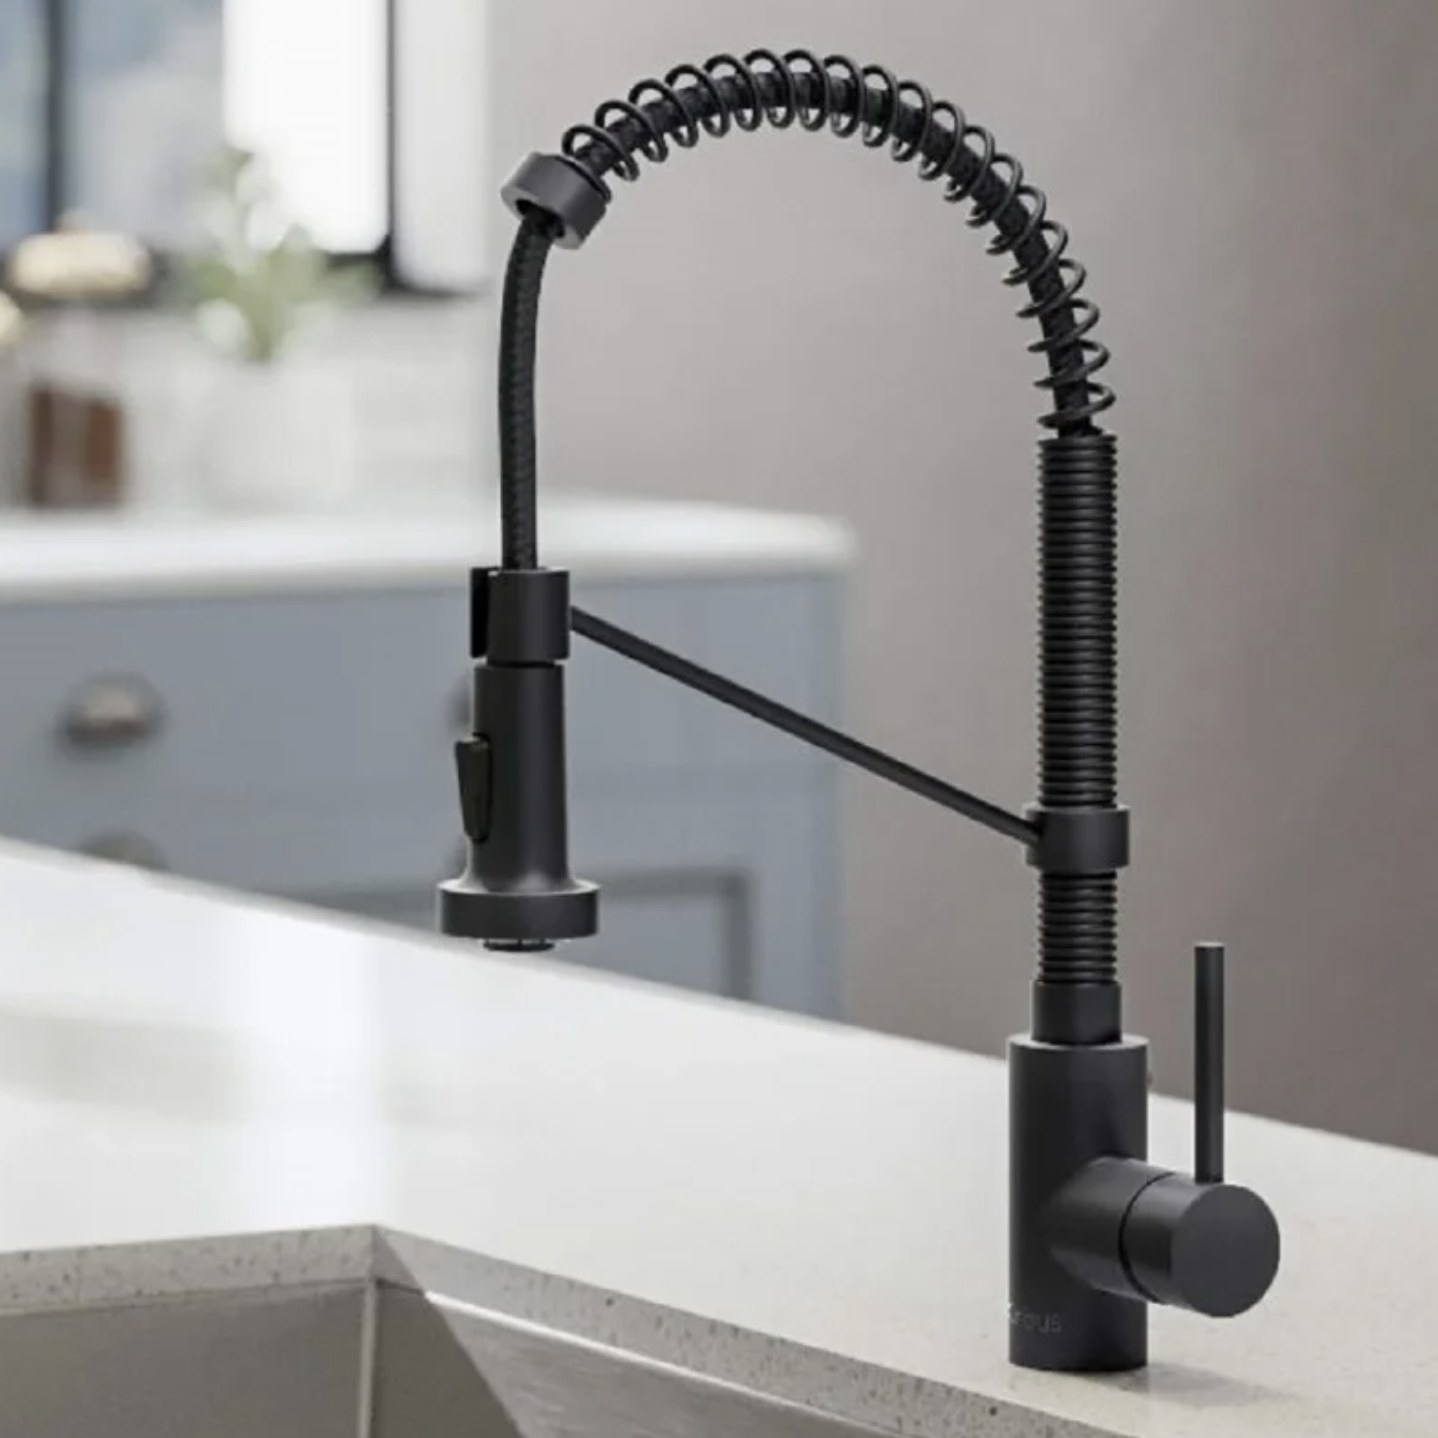 A black faucet